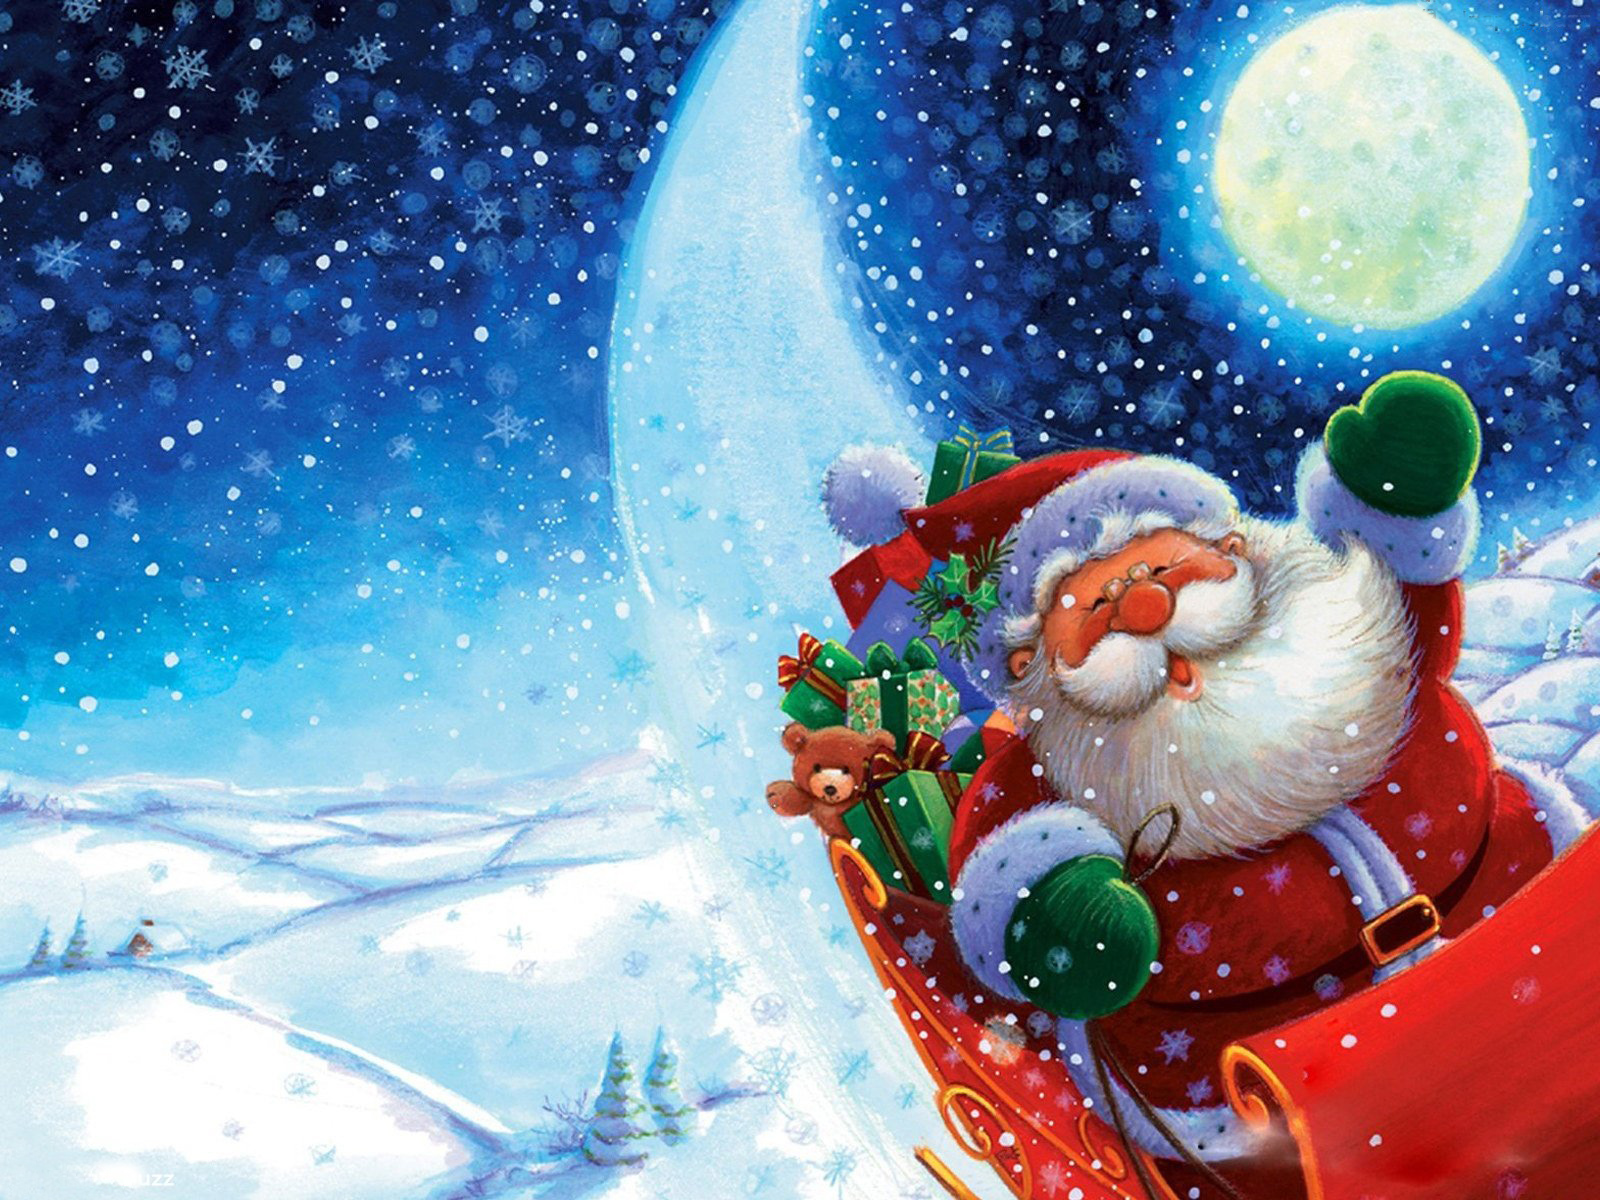 http://2.bp.blogspot.com/-PKw7OET_538/TtNeJD0woDI/AAAAAAAADm8/ExJd0oxStpQ/s1600/Santa-Sleighing-Funny-Wallpaper.jpg